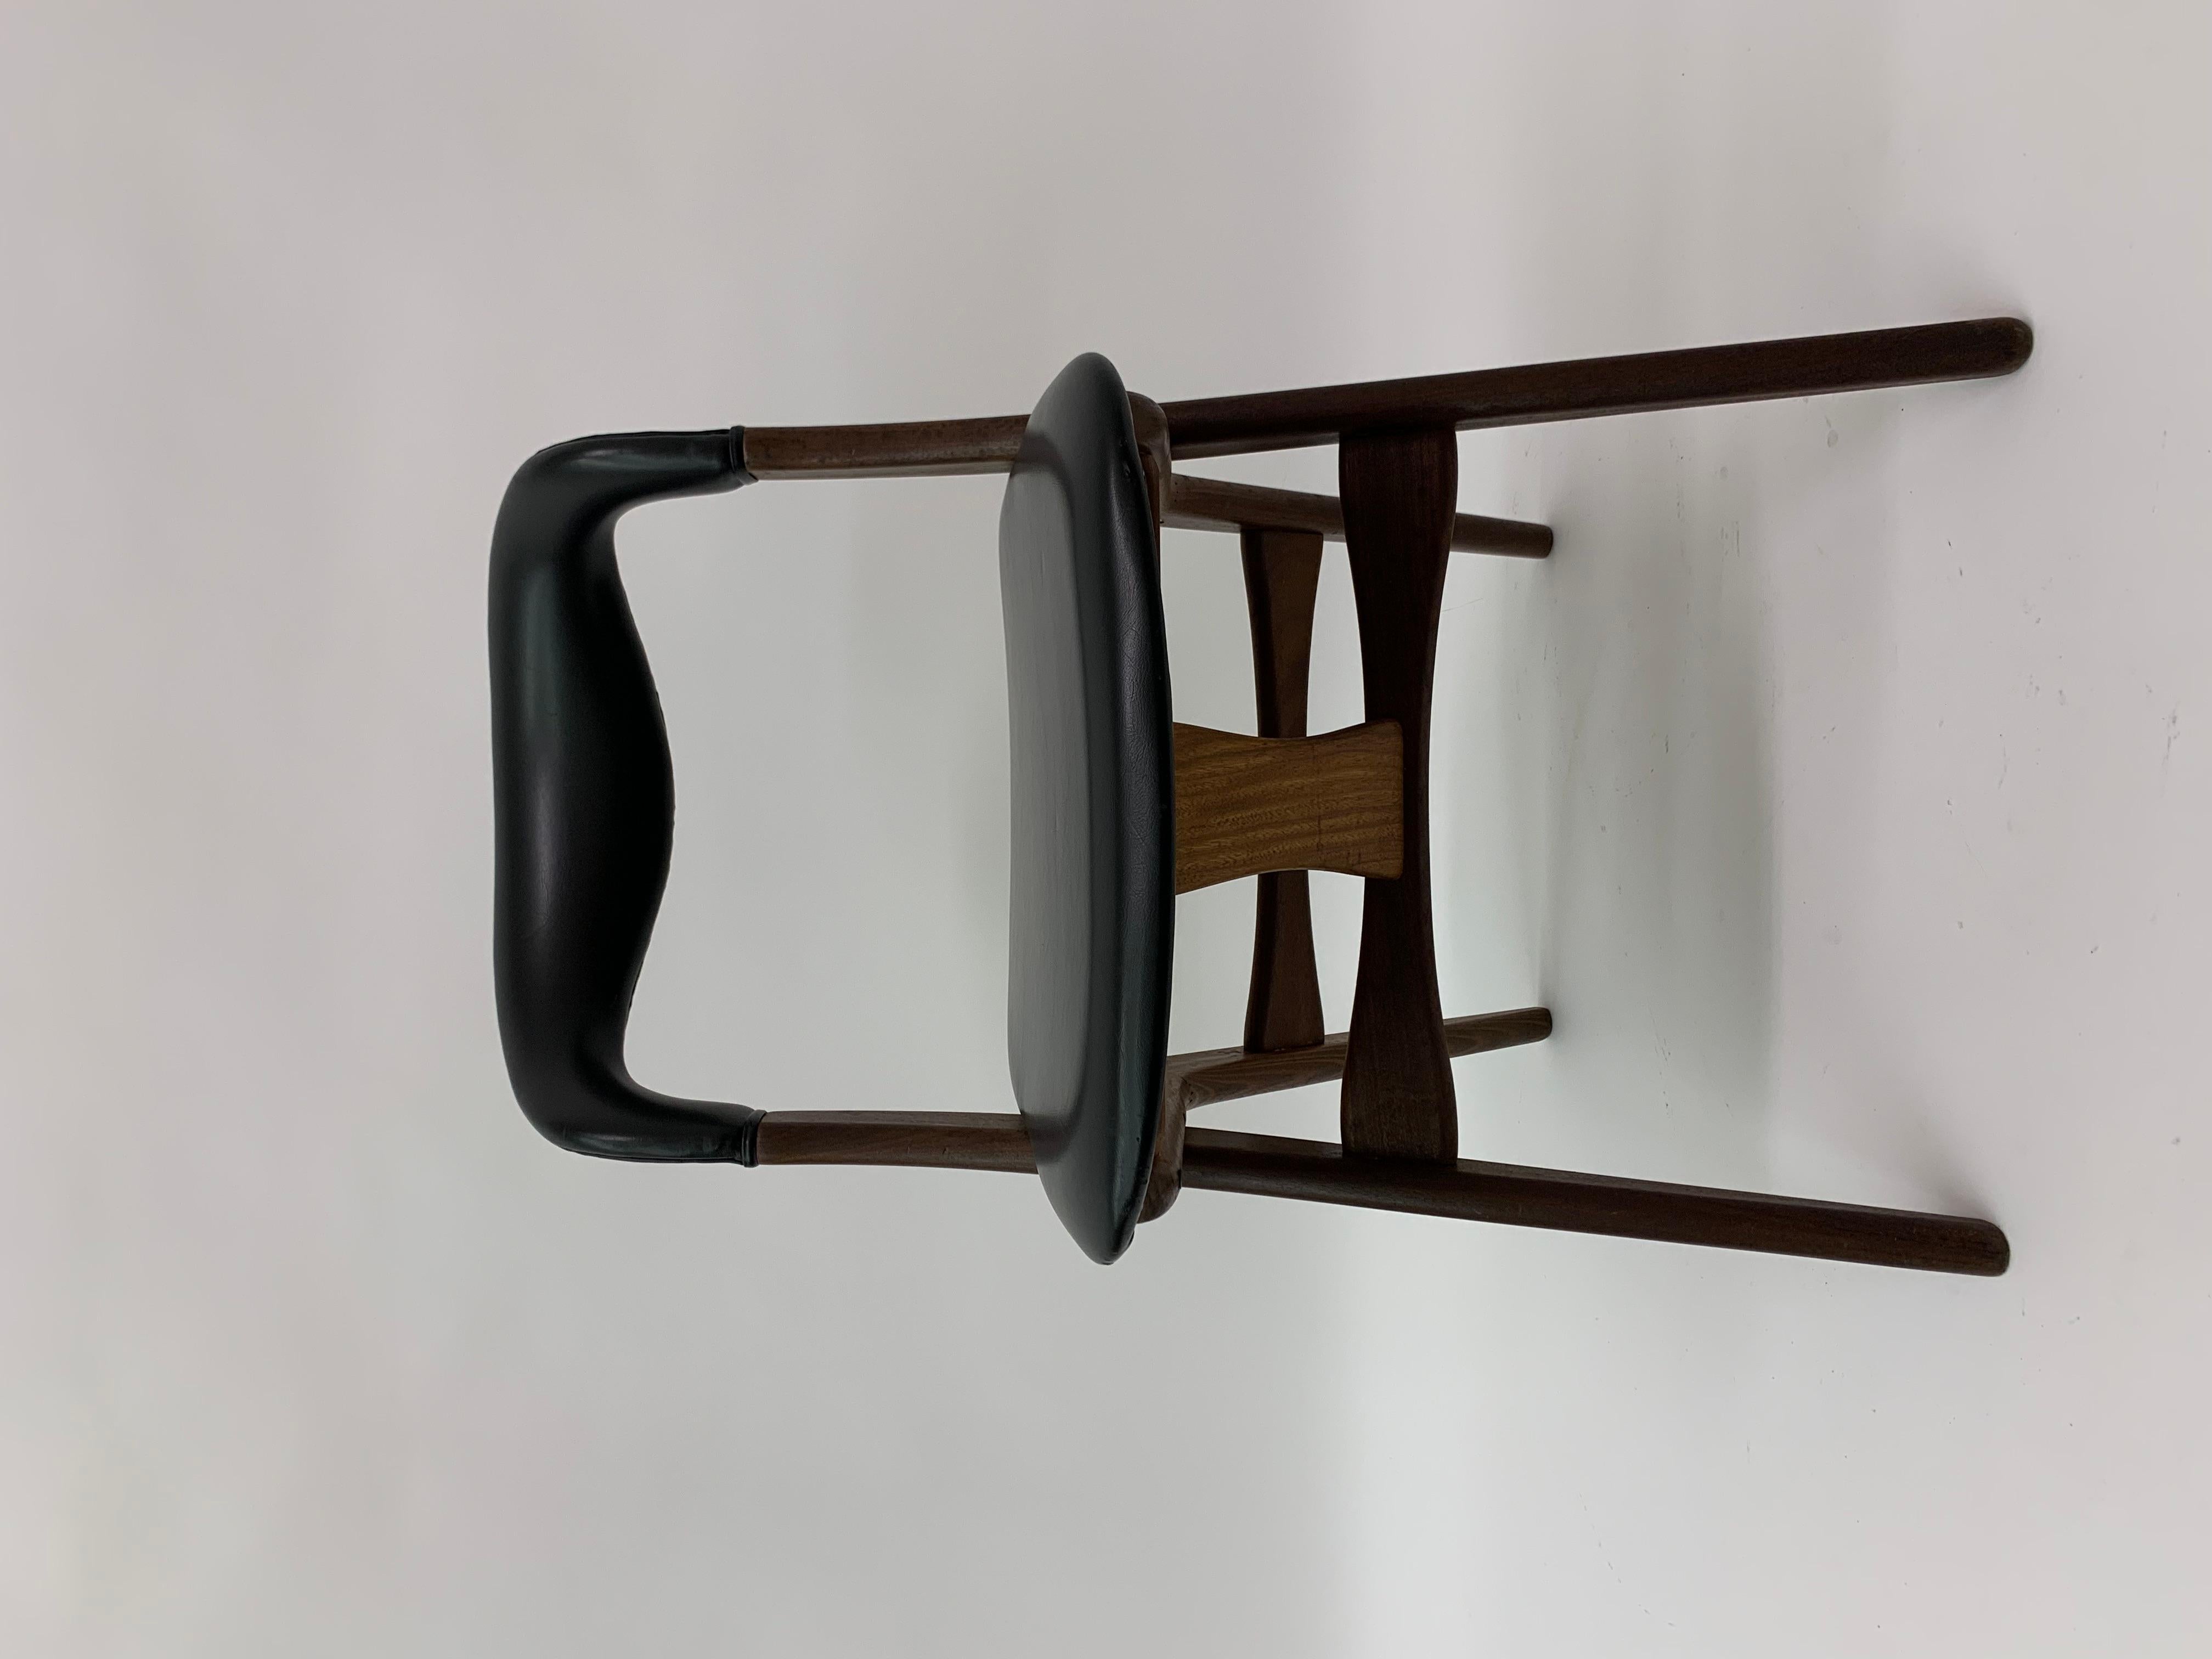 Vintage dining chair by Louis van Teeffelen , 1960’s

Dimensions: 46cm W , 50cm H, 55cm D, 45cm Hseat
Condition: Has some damage on the skai see photos
Period: 1960’s
Manufacturer: AWA
Designer: Louis van Teeffelen
Origin: the Netherlands
